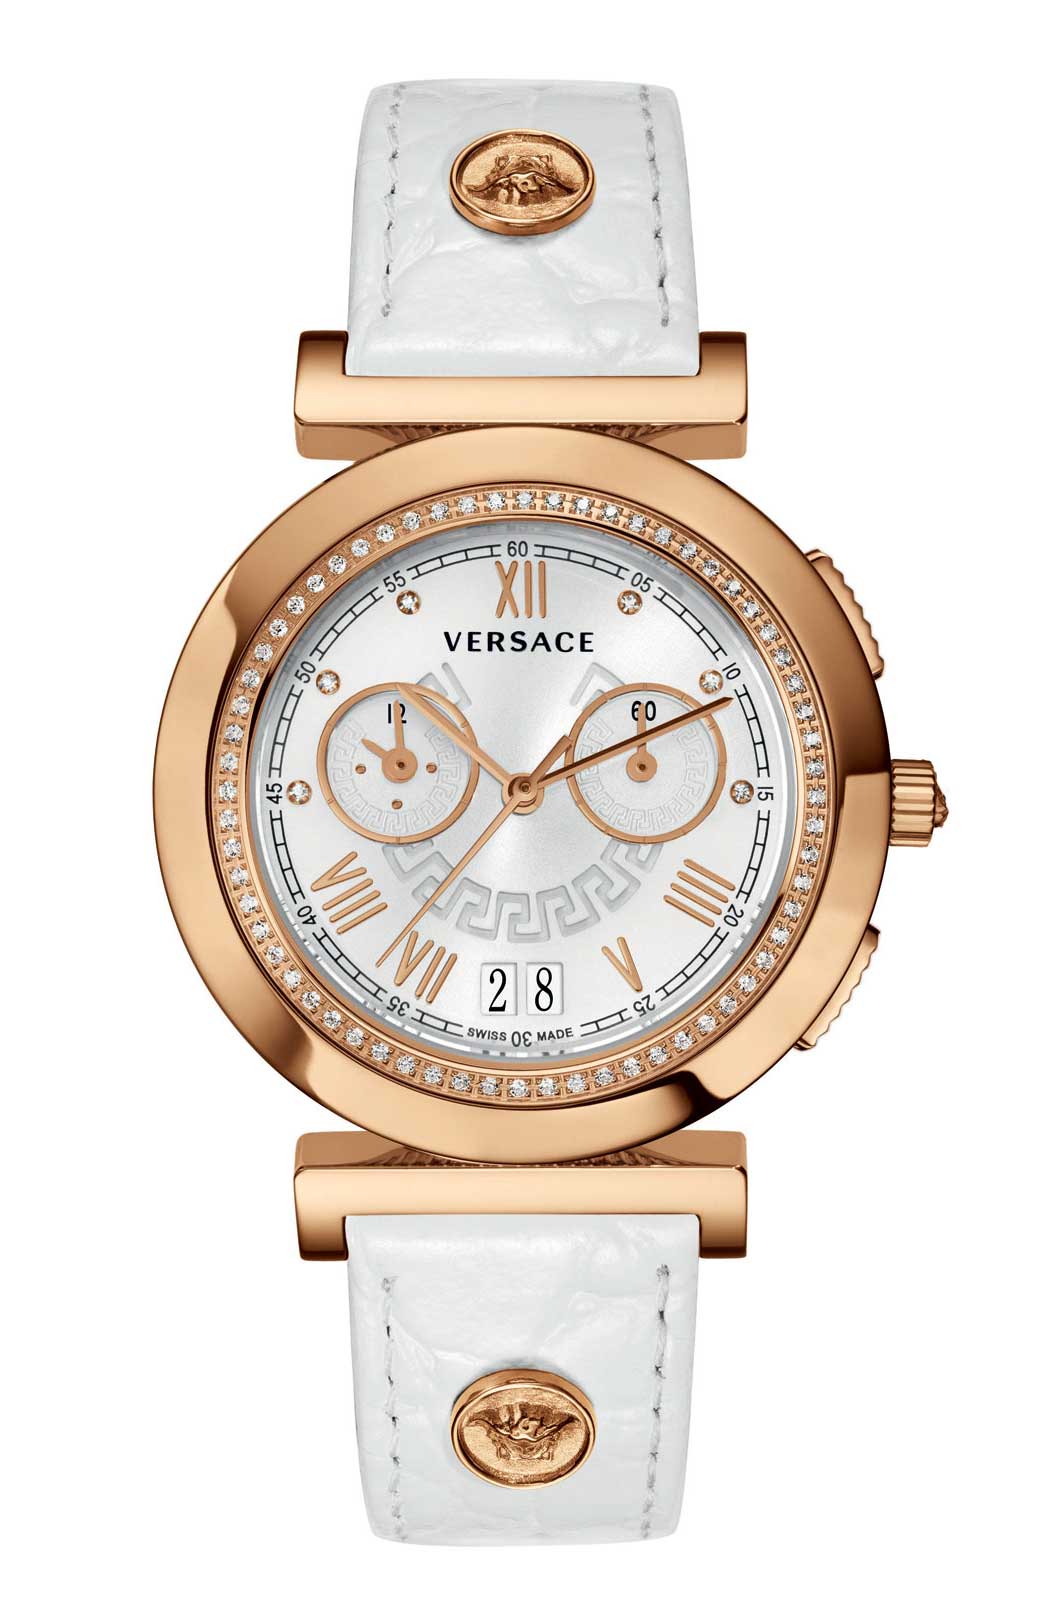 Versace QUARTZ watch 5020B WHITE